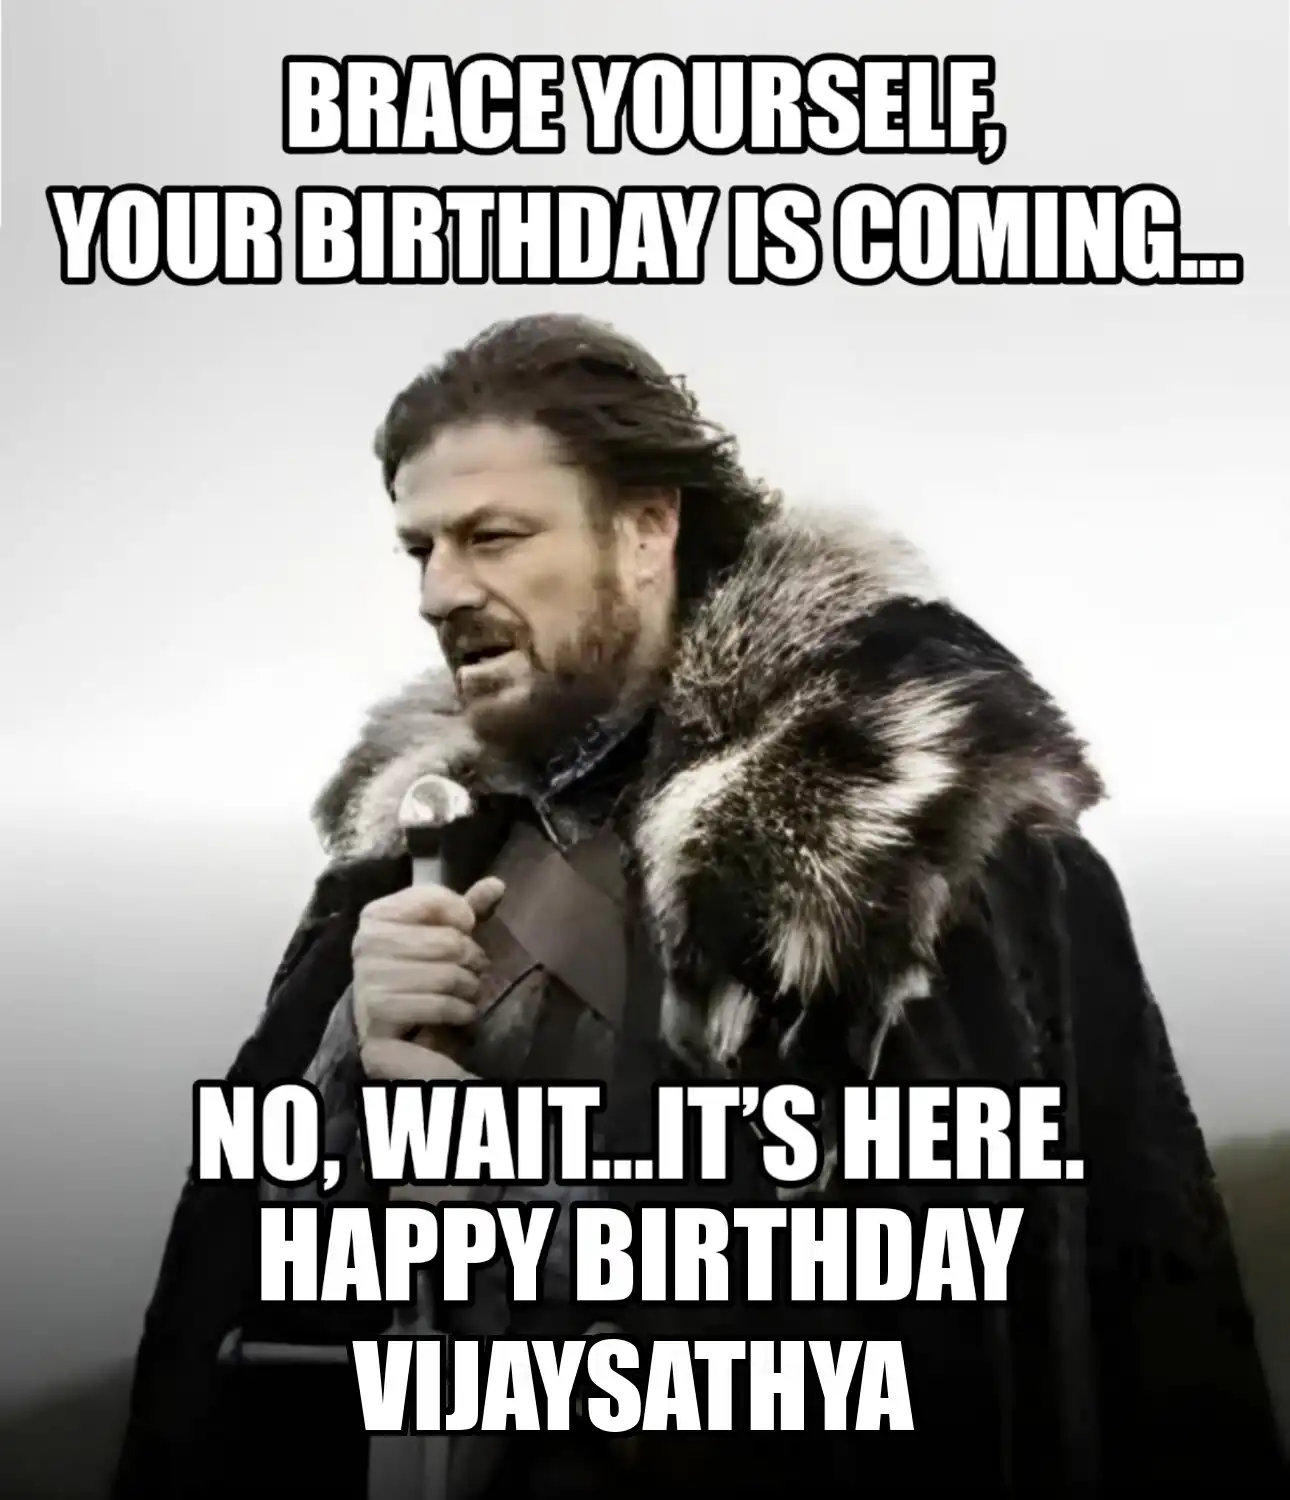 Happy Birthday Vijaysathya Brace Yourself Your Birthday Is Coming Meme